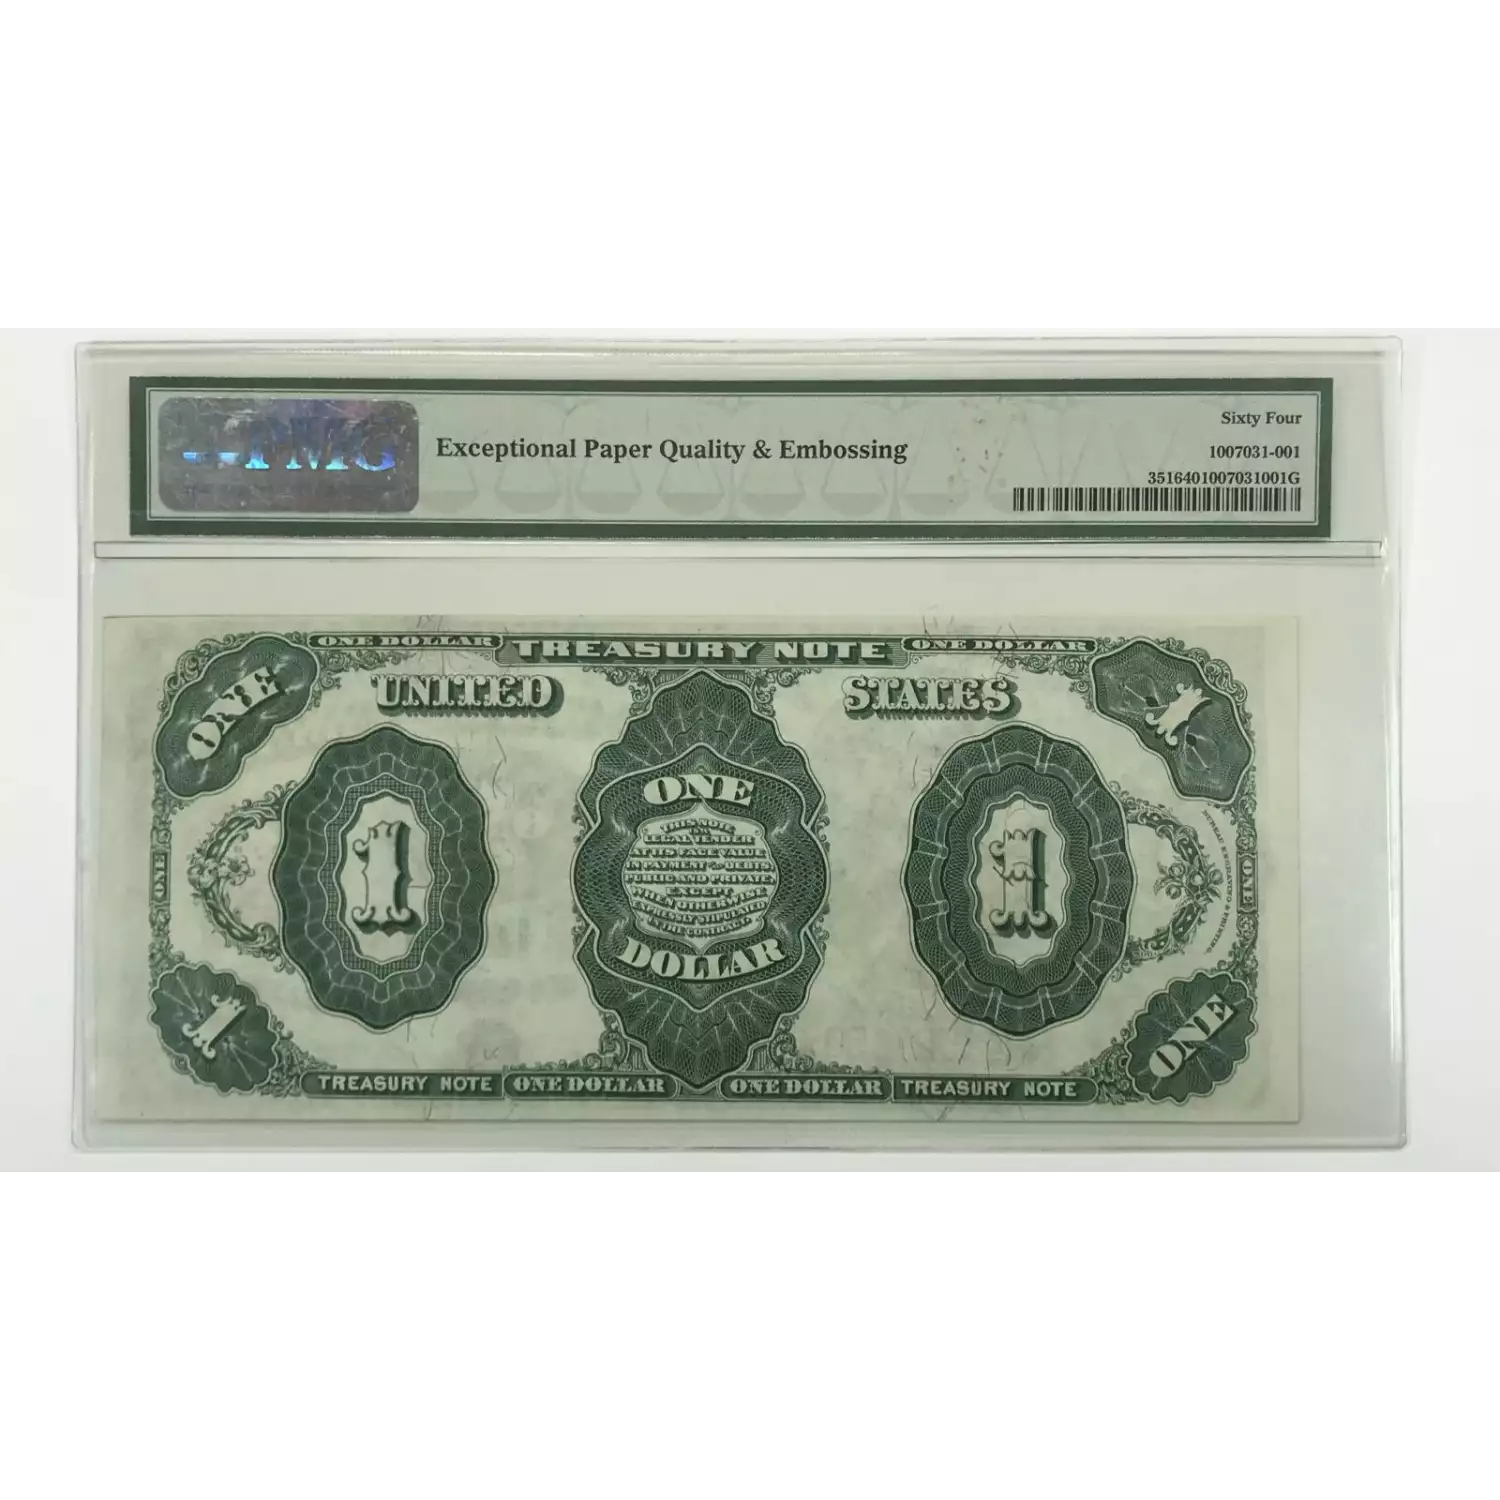 Treasury Note